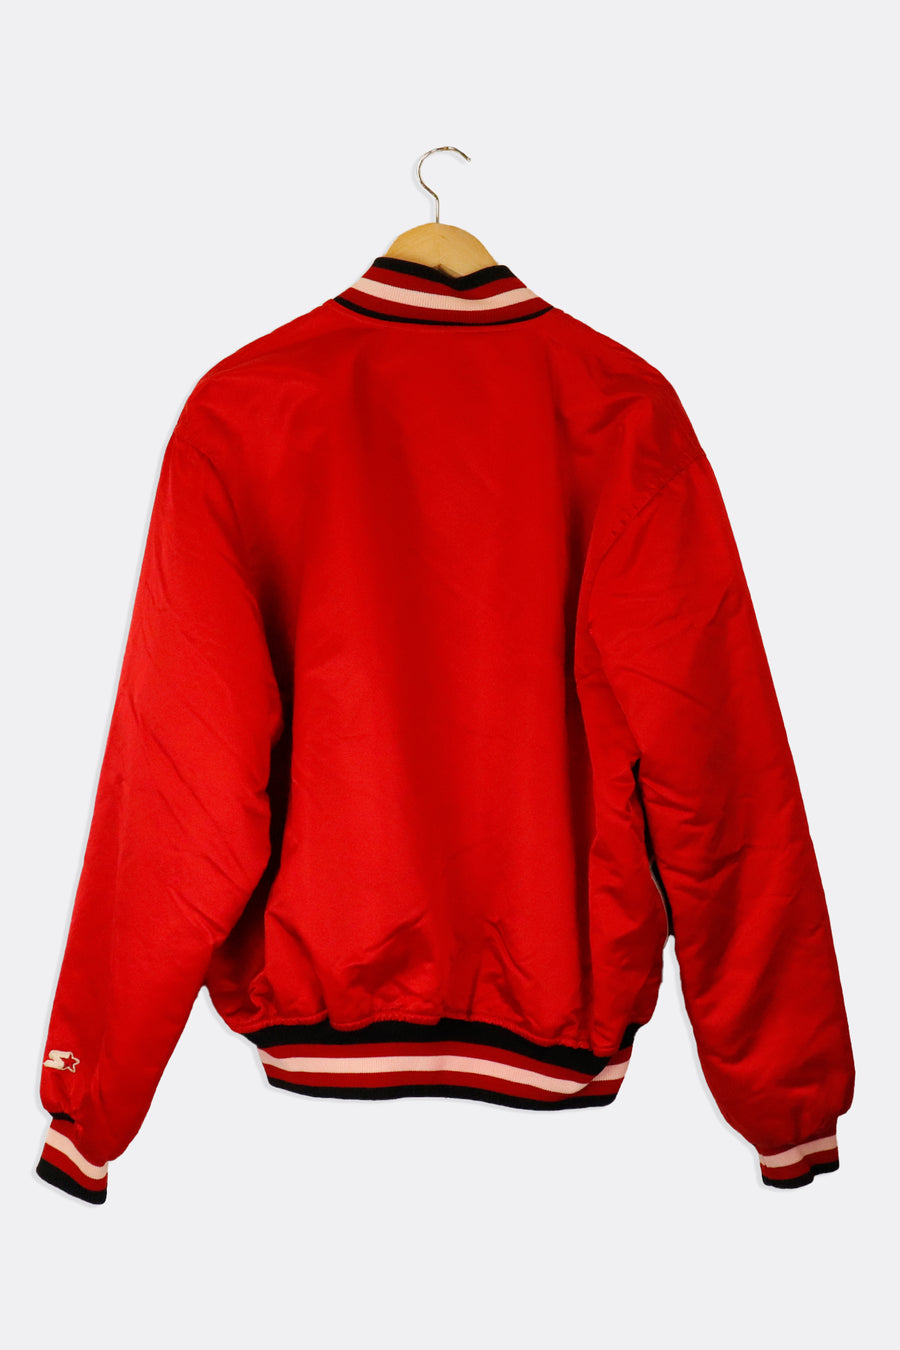 Vintage NBA Chicago Bulls Starter Red Jacket Sz XL